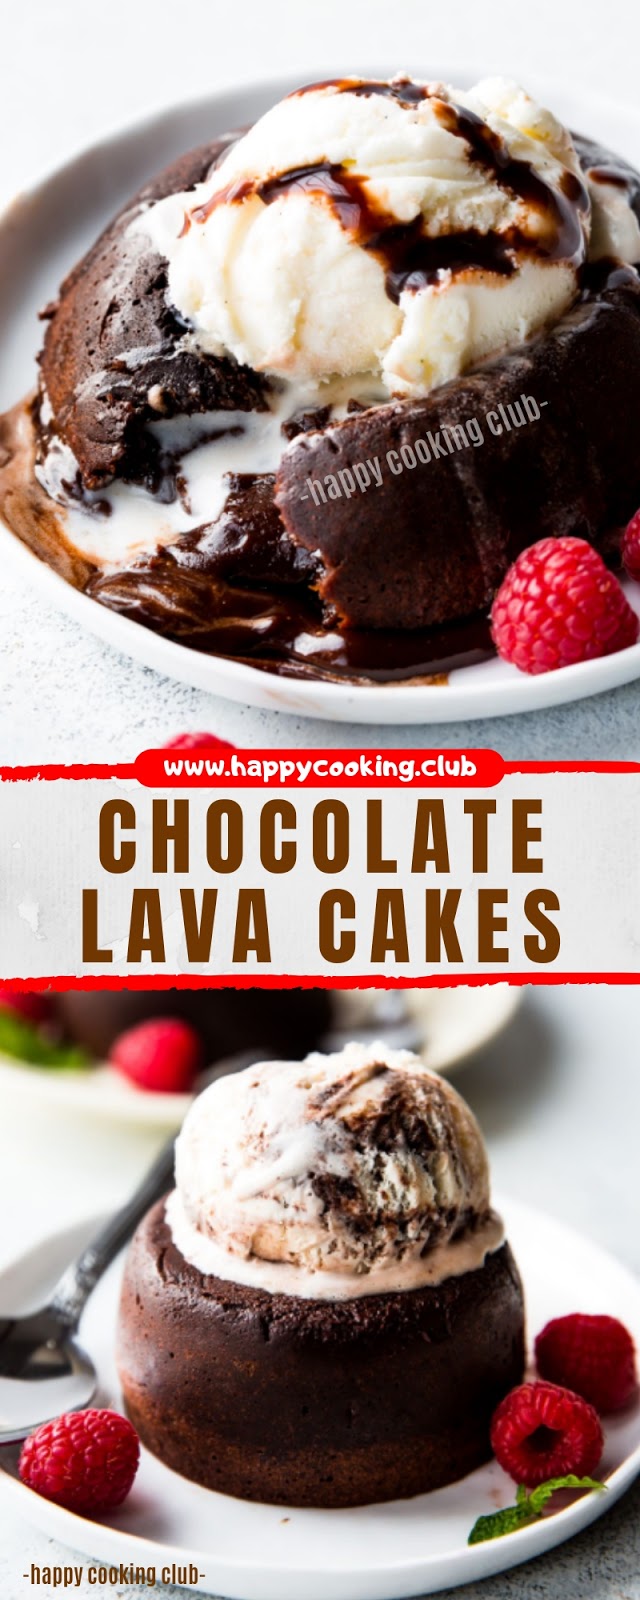 CHOCOLATE LAVA CAKES